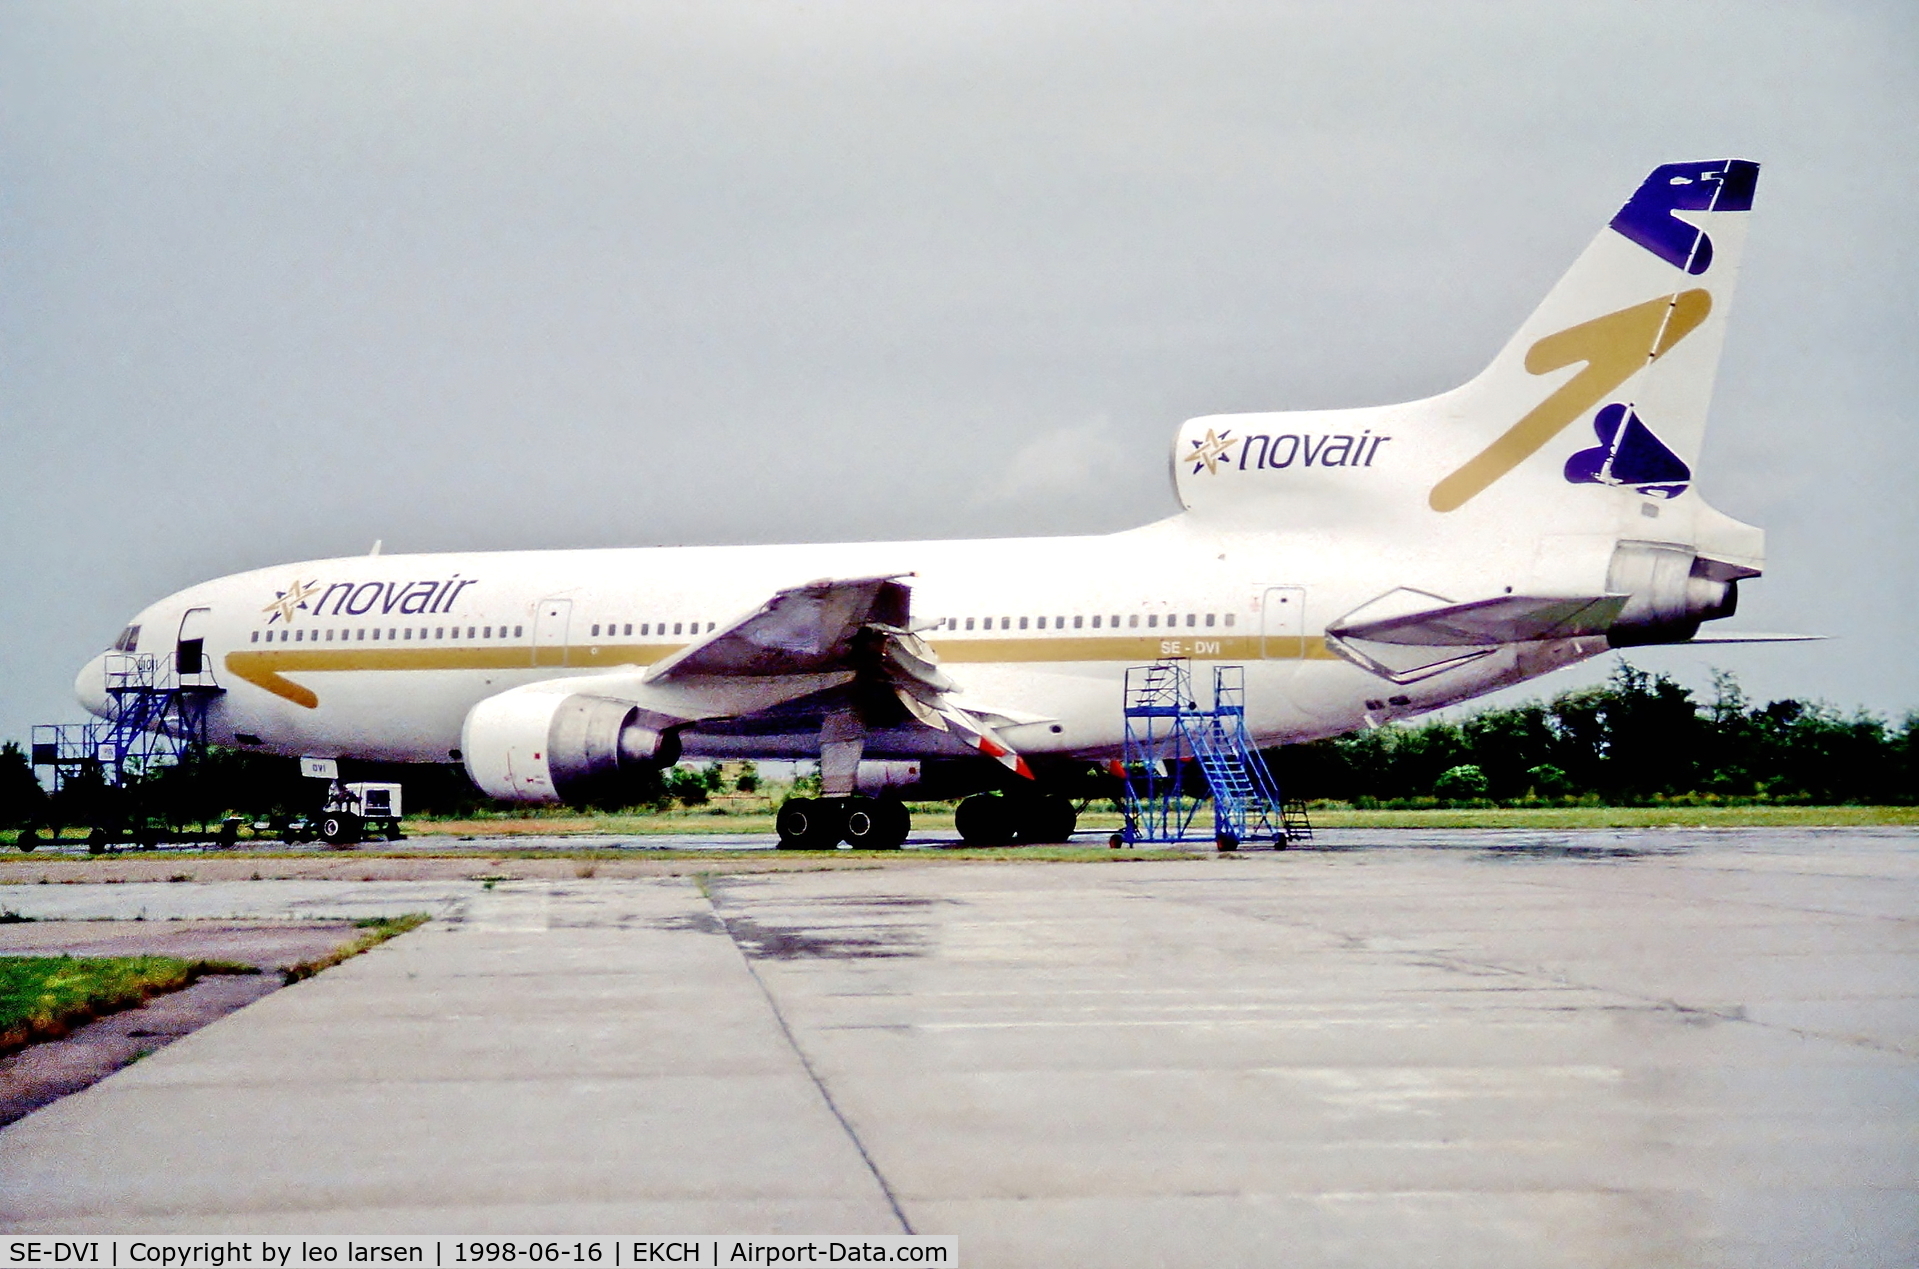 SE-DVI, 1983 Lockheed L-1011-385-3 TriStar 500 C/N 193H-1248, Copenhagen 16.6.98